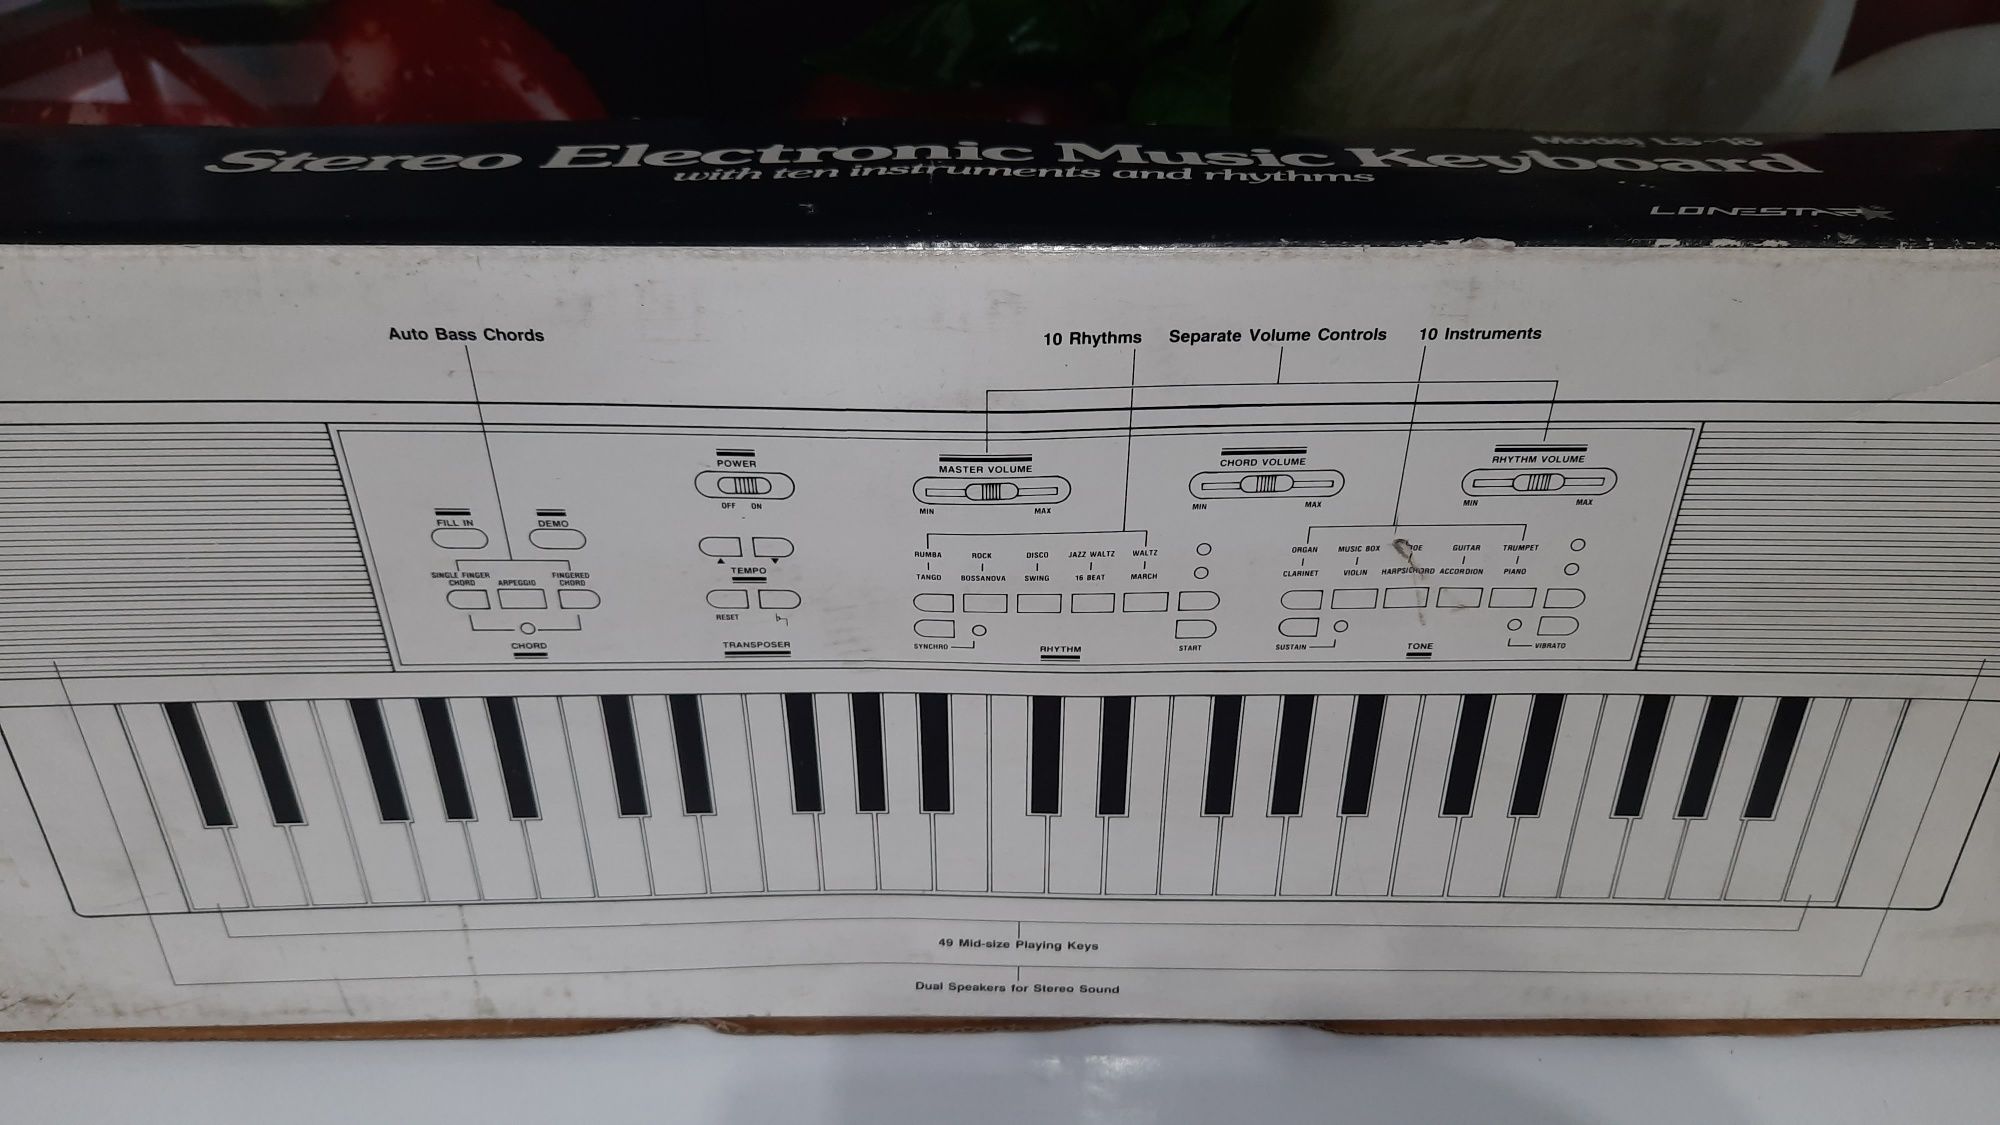 Keyboard Lonestar LS-18 lata 80/90